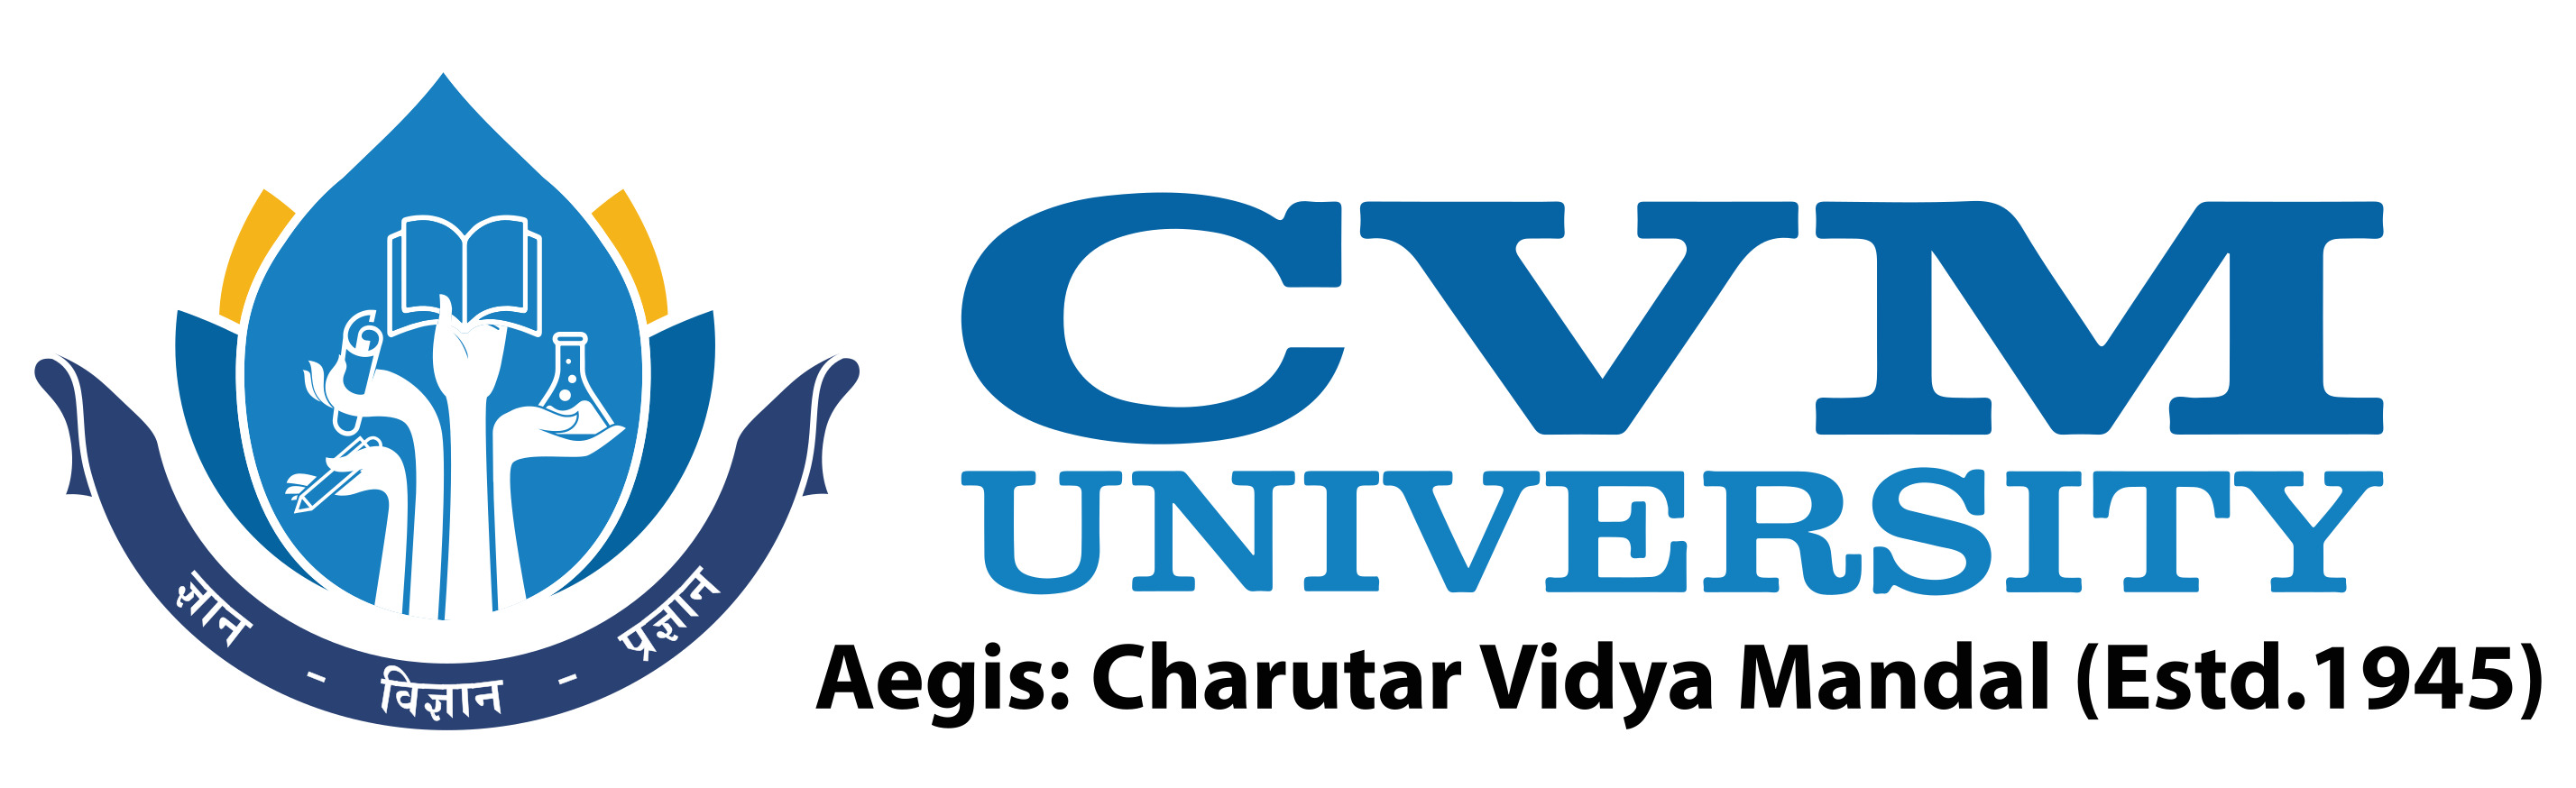 The Charutar Vidya Mandal (CVM) University